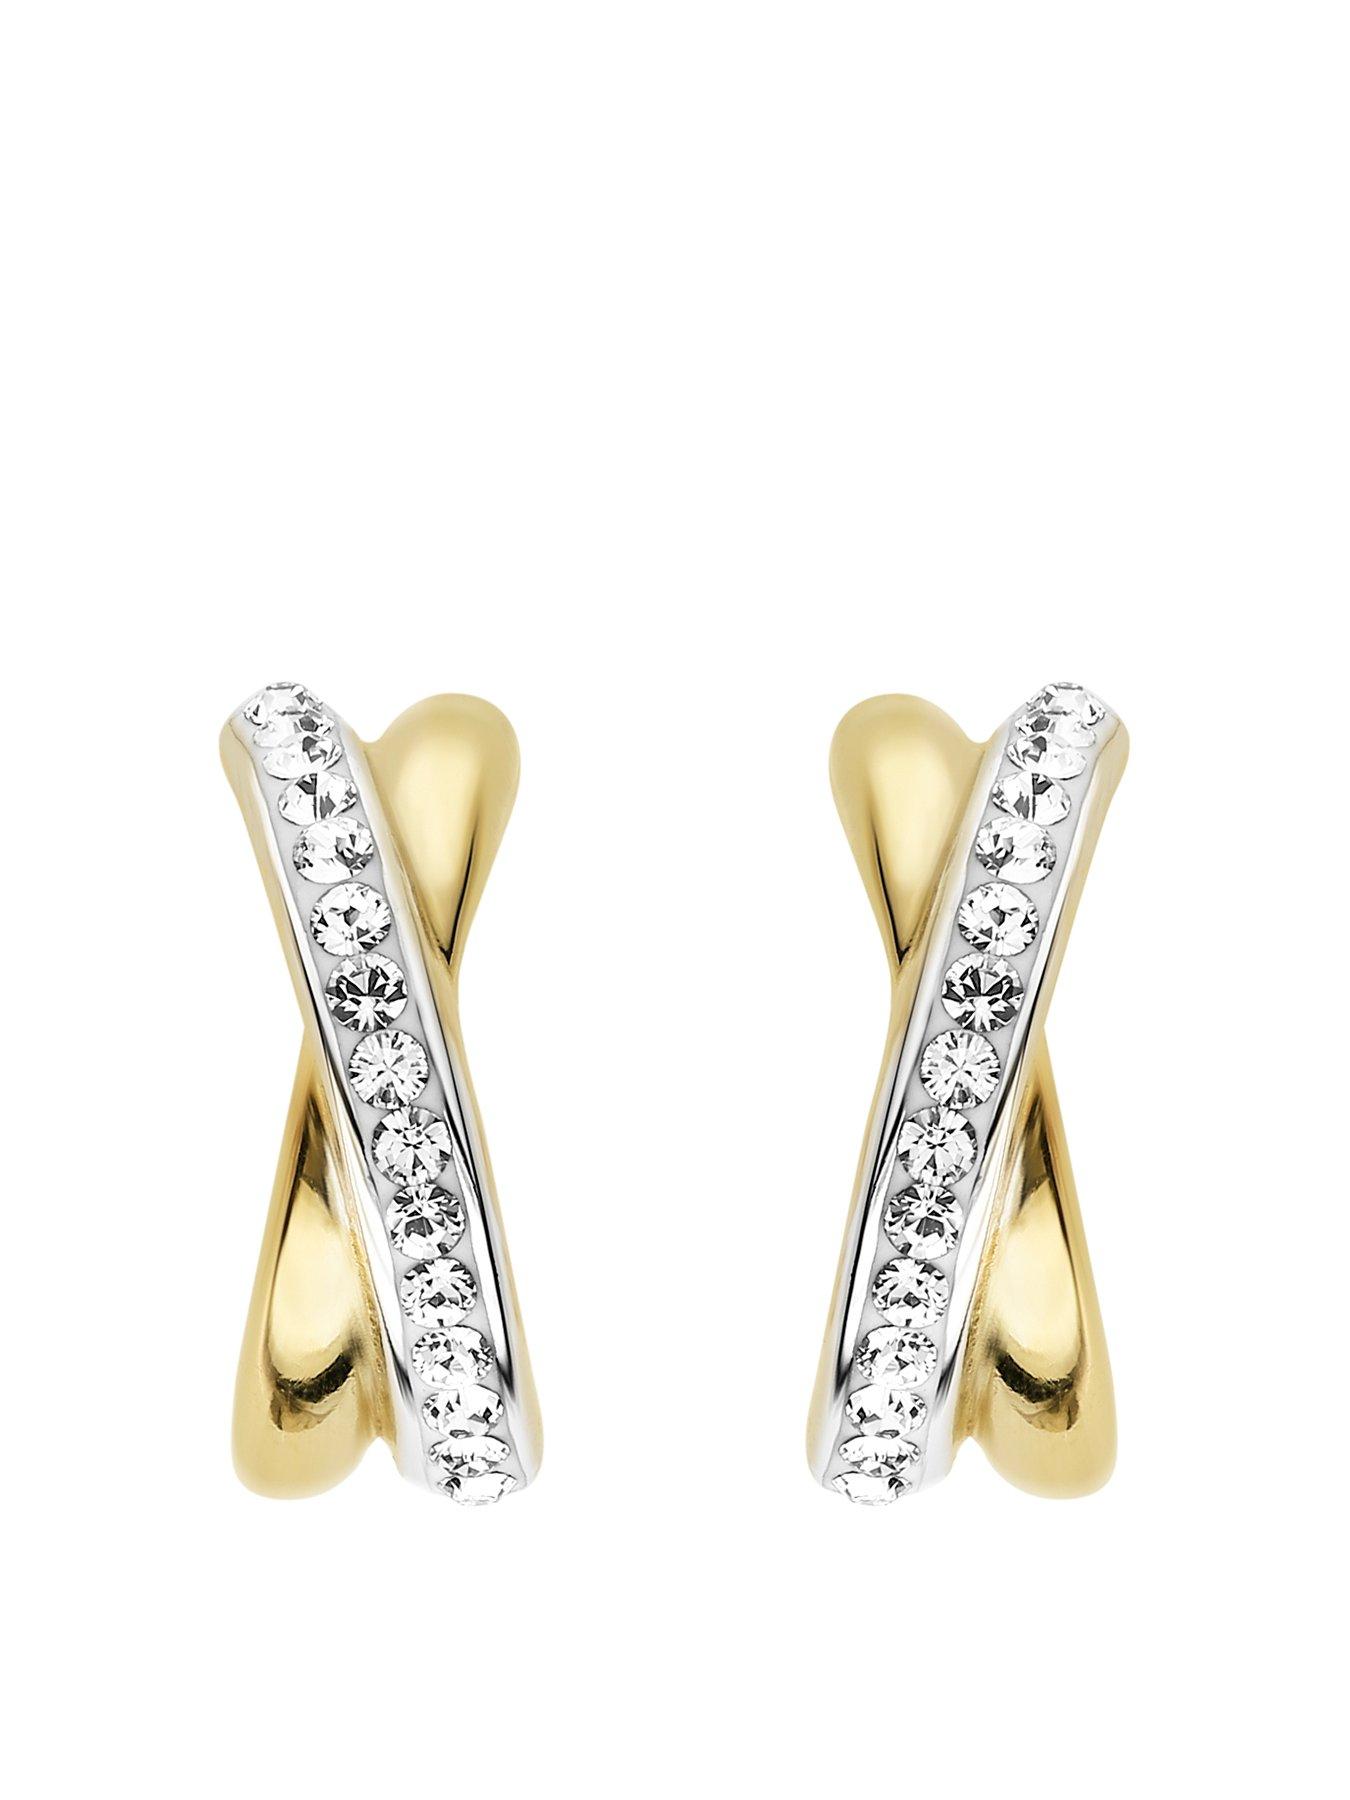 5mm CZ crystal 9ct white gold kiss stud earrings Gift box